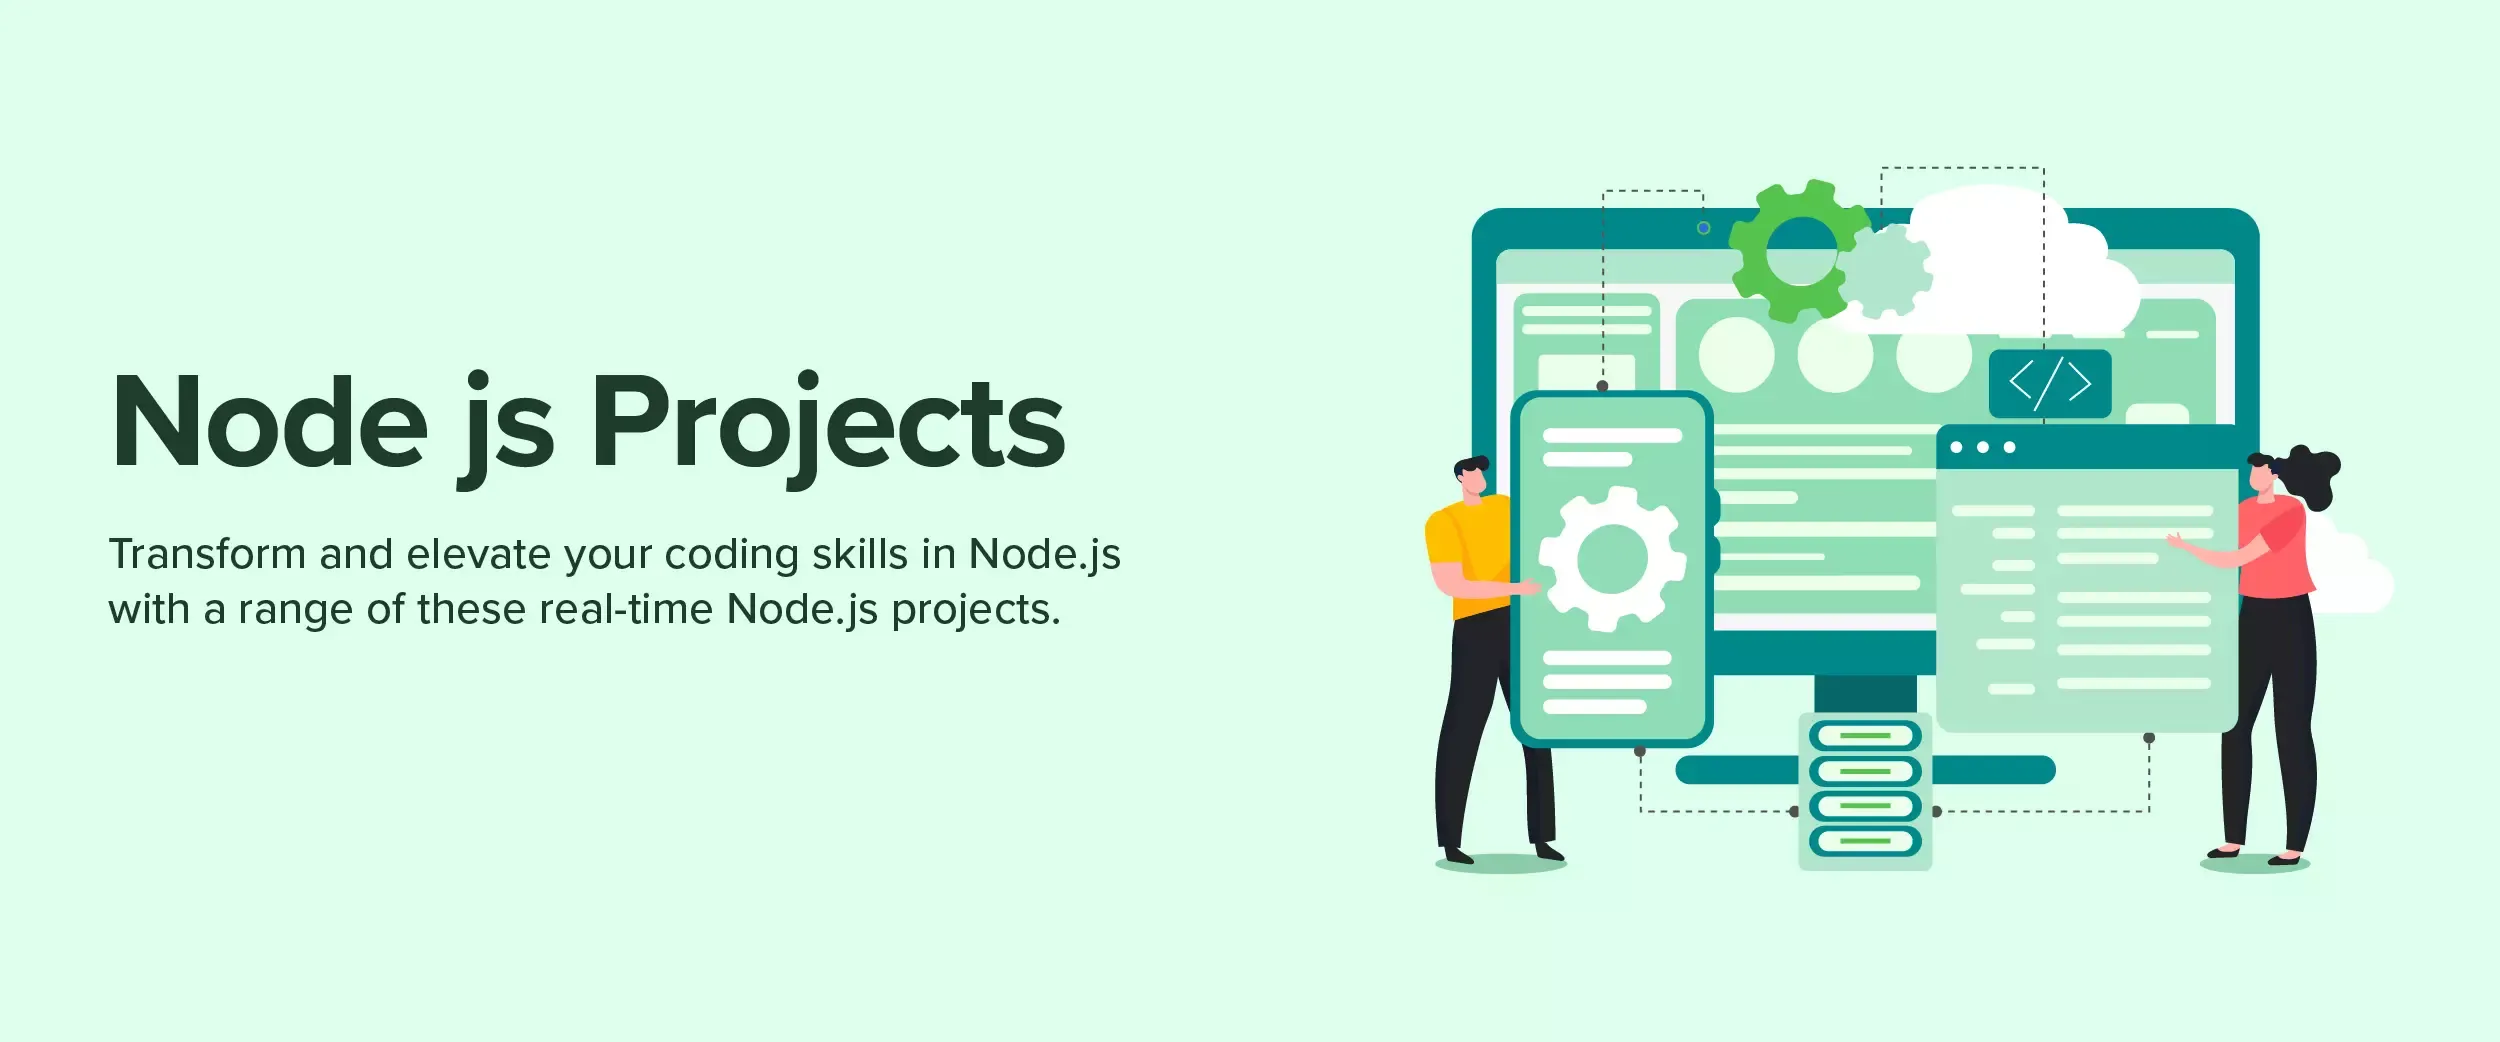 node js projects tips